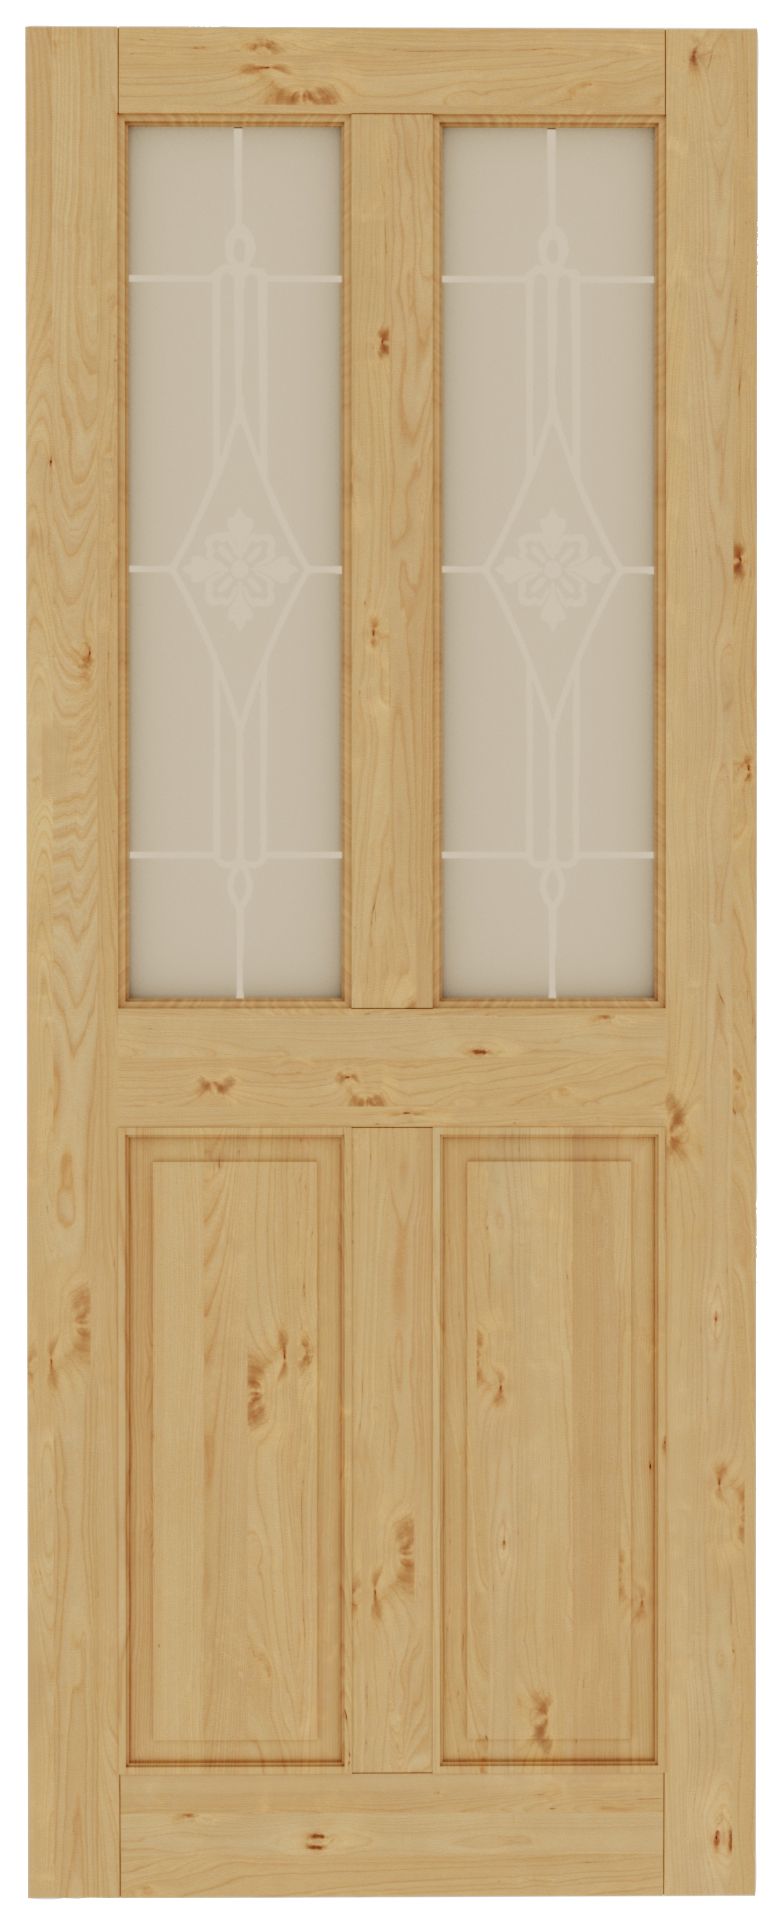 Wickes Chester 4 Panel Knotty Pine Glazed Door - 1981 x 686mm